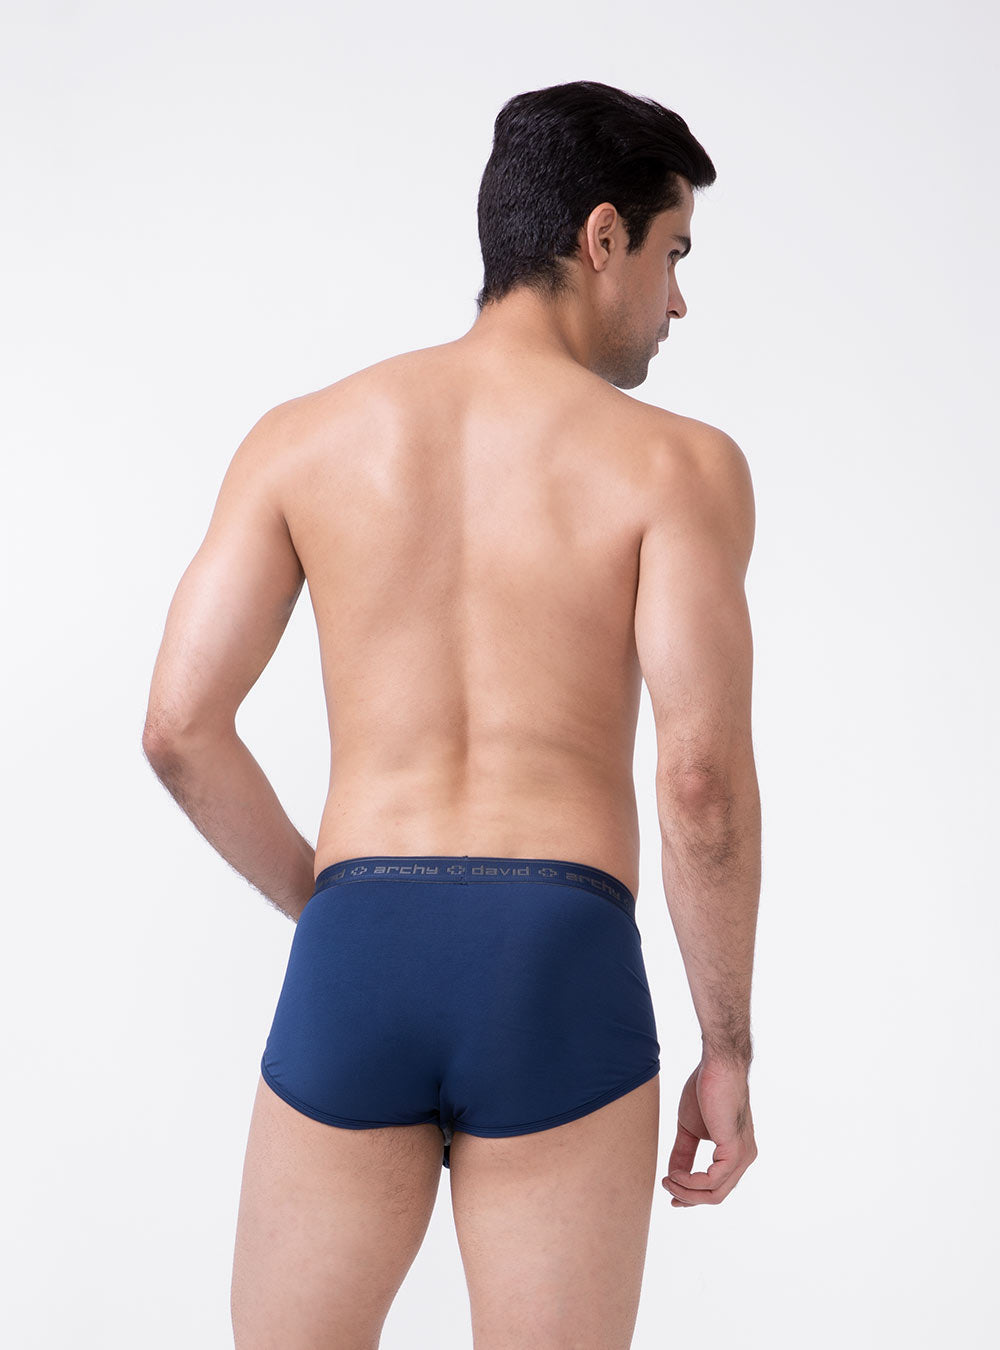 DAVID ARCHY Men's Dual Pouch Underwear Micro Modal Trunks Separate